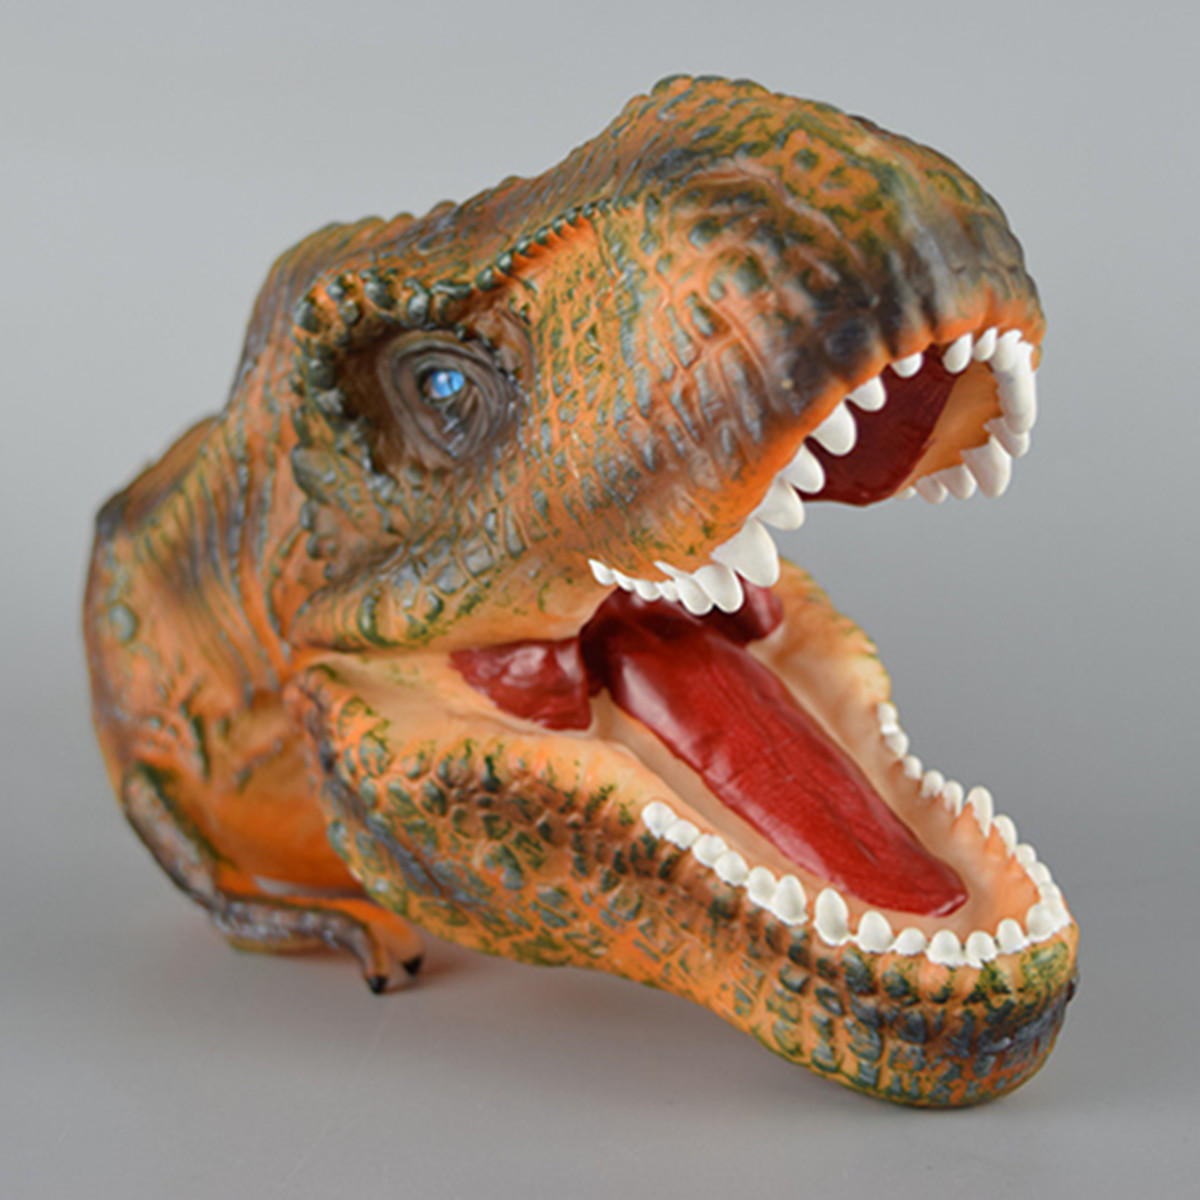 Baryonyx Allosaurus Tyrannosaurus Dinosaur Hand Puppet Realistic Play Model Toy